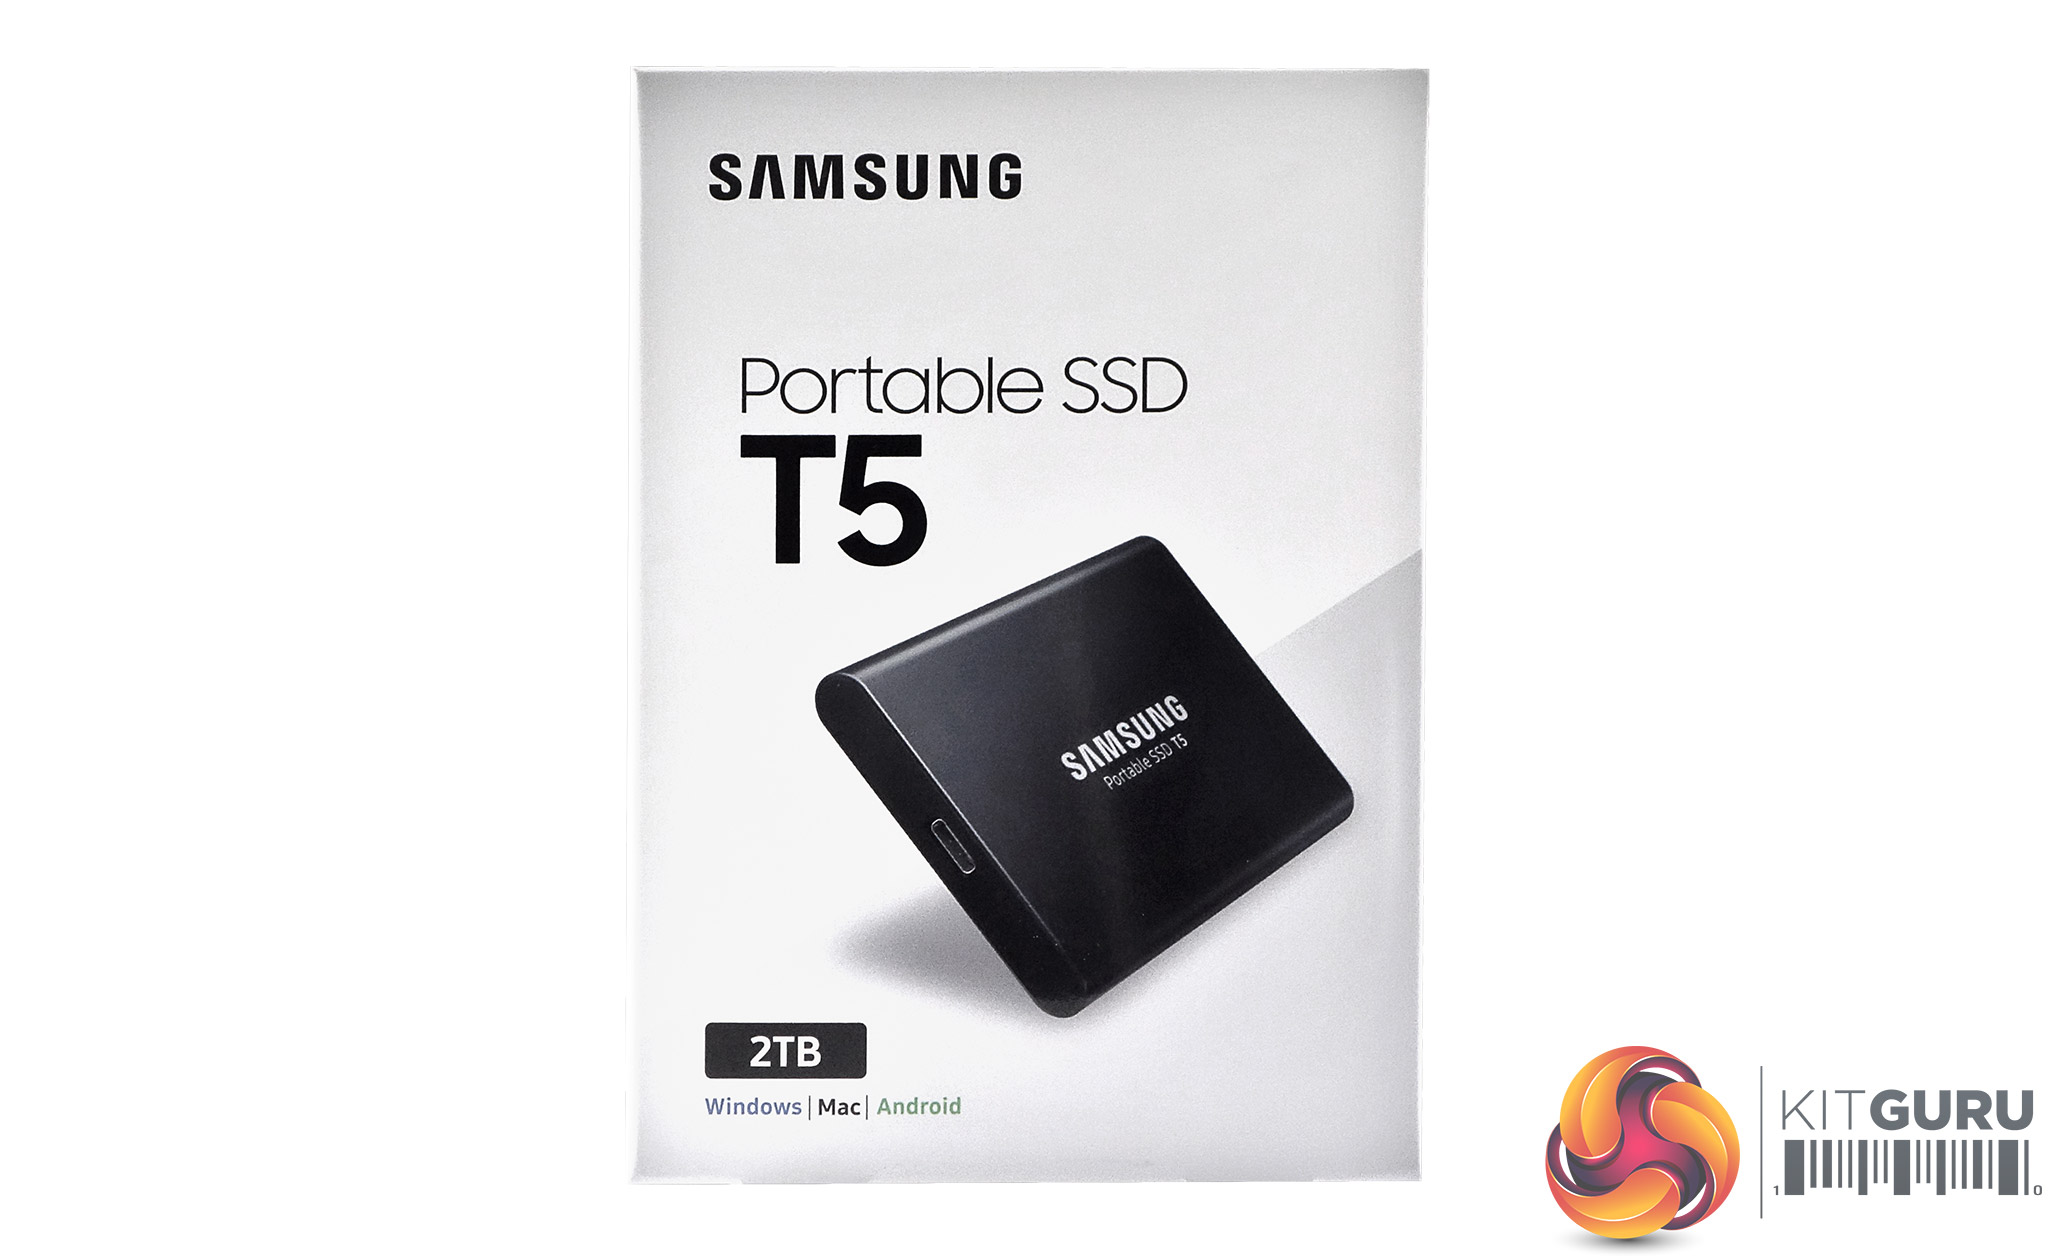 Samsung Portable SSD T5 2TB Review | KitGuru- Part